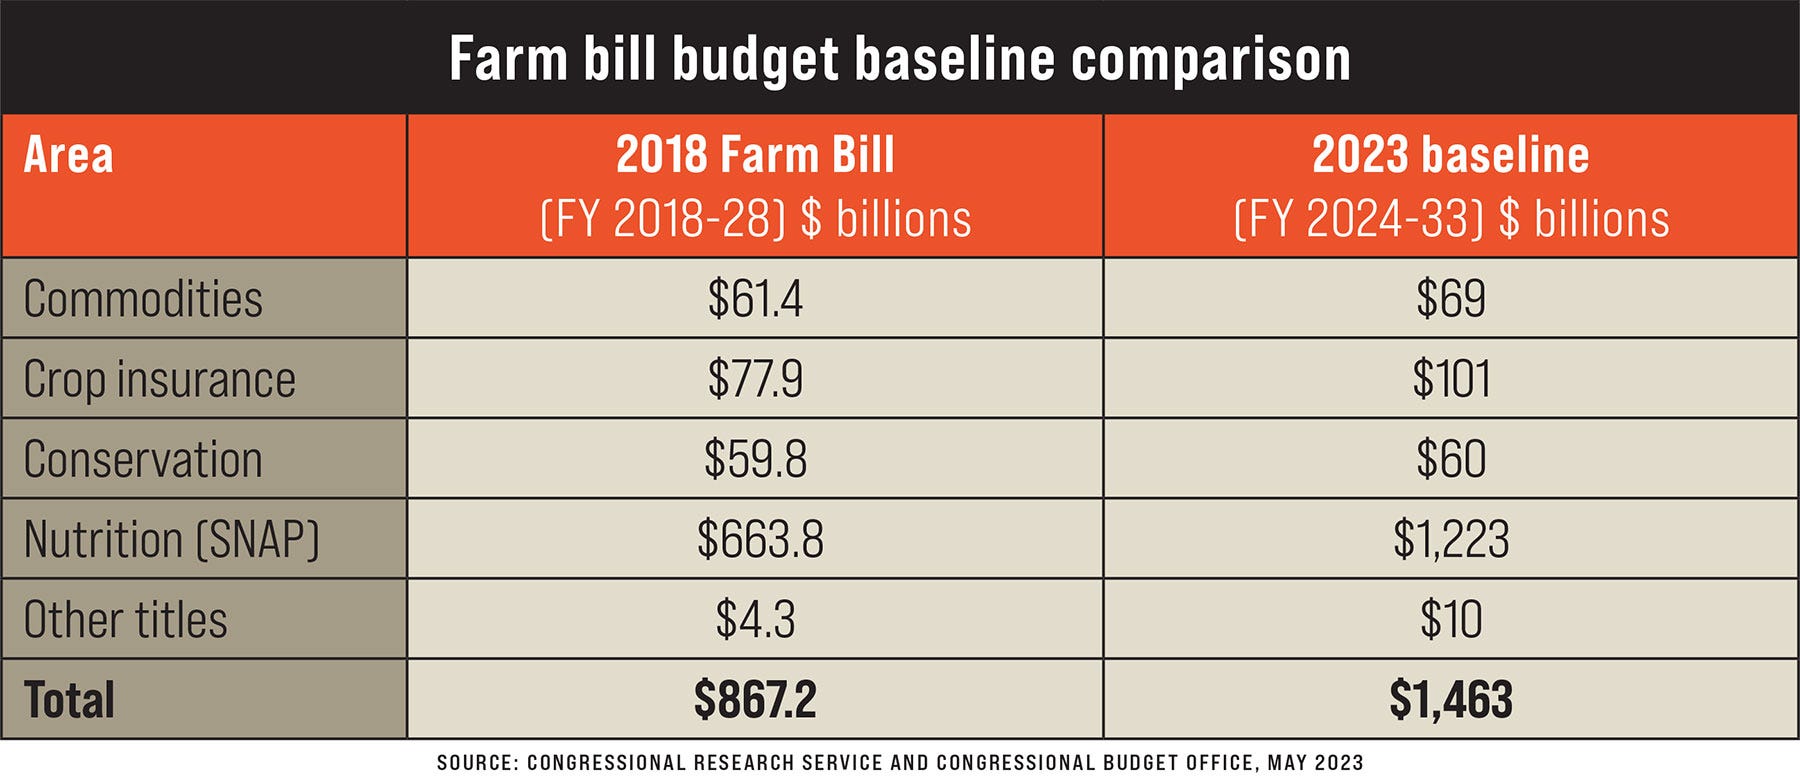 Farm bill budget baseline comparison